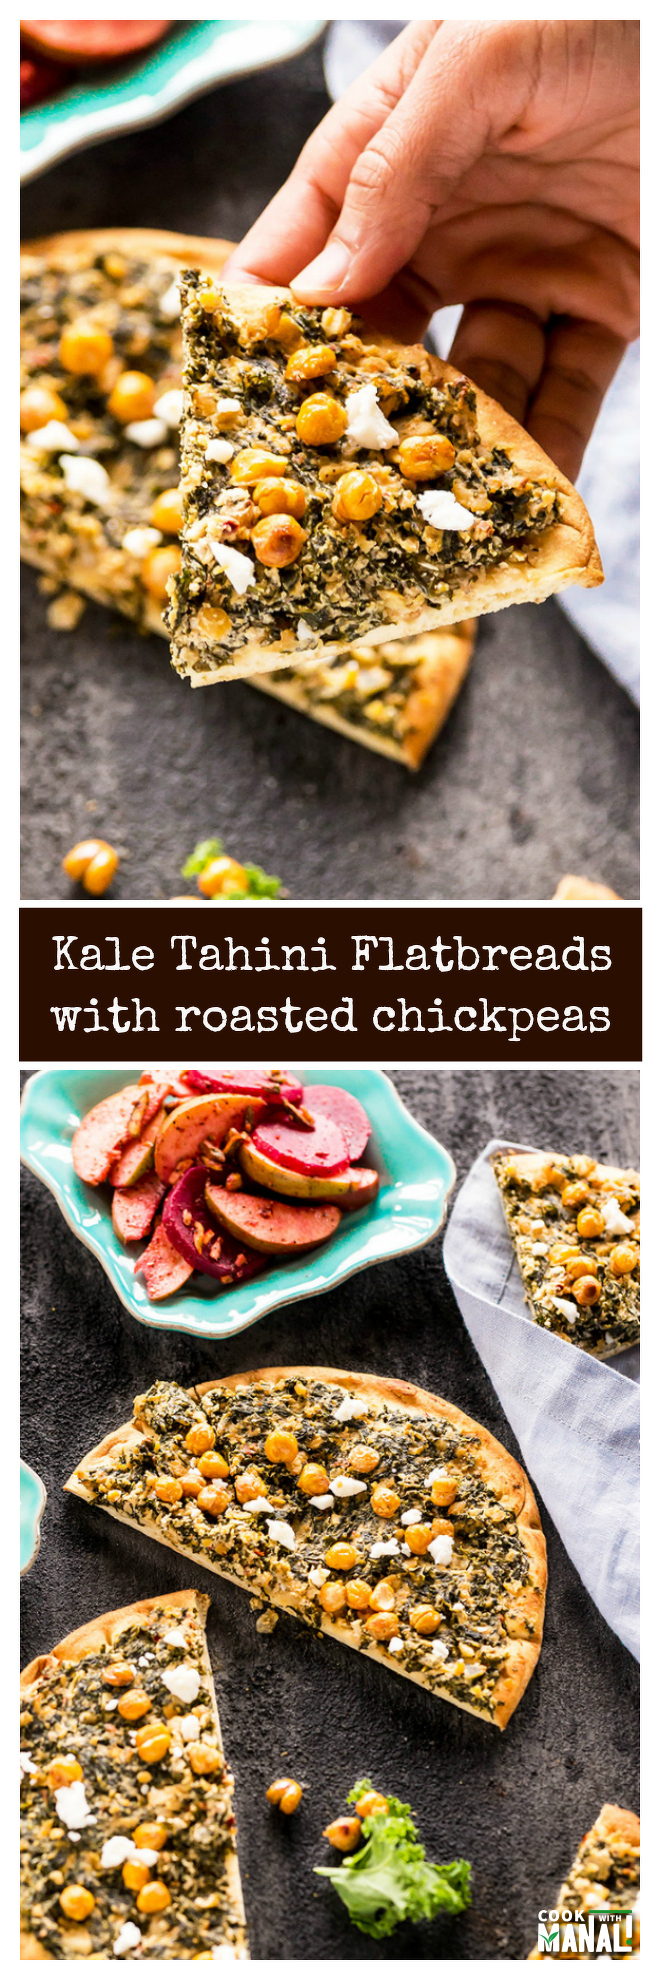 kale-tahini-flatbreads-with-roasted-chickpeas-collage